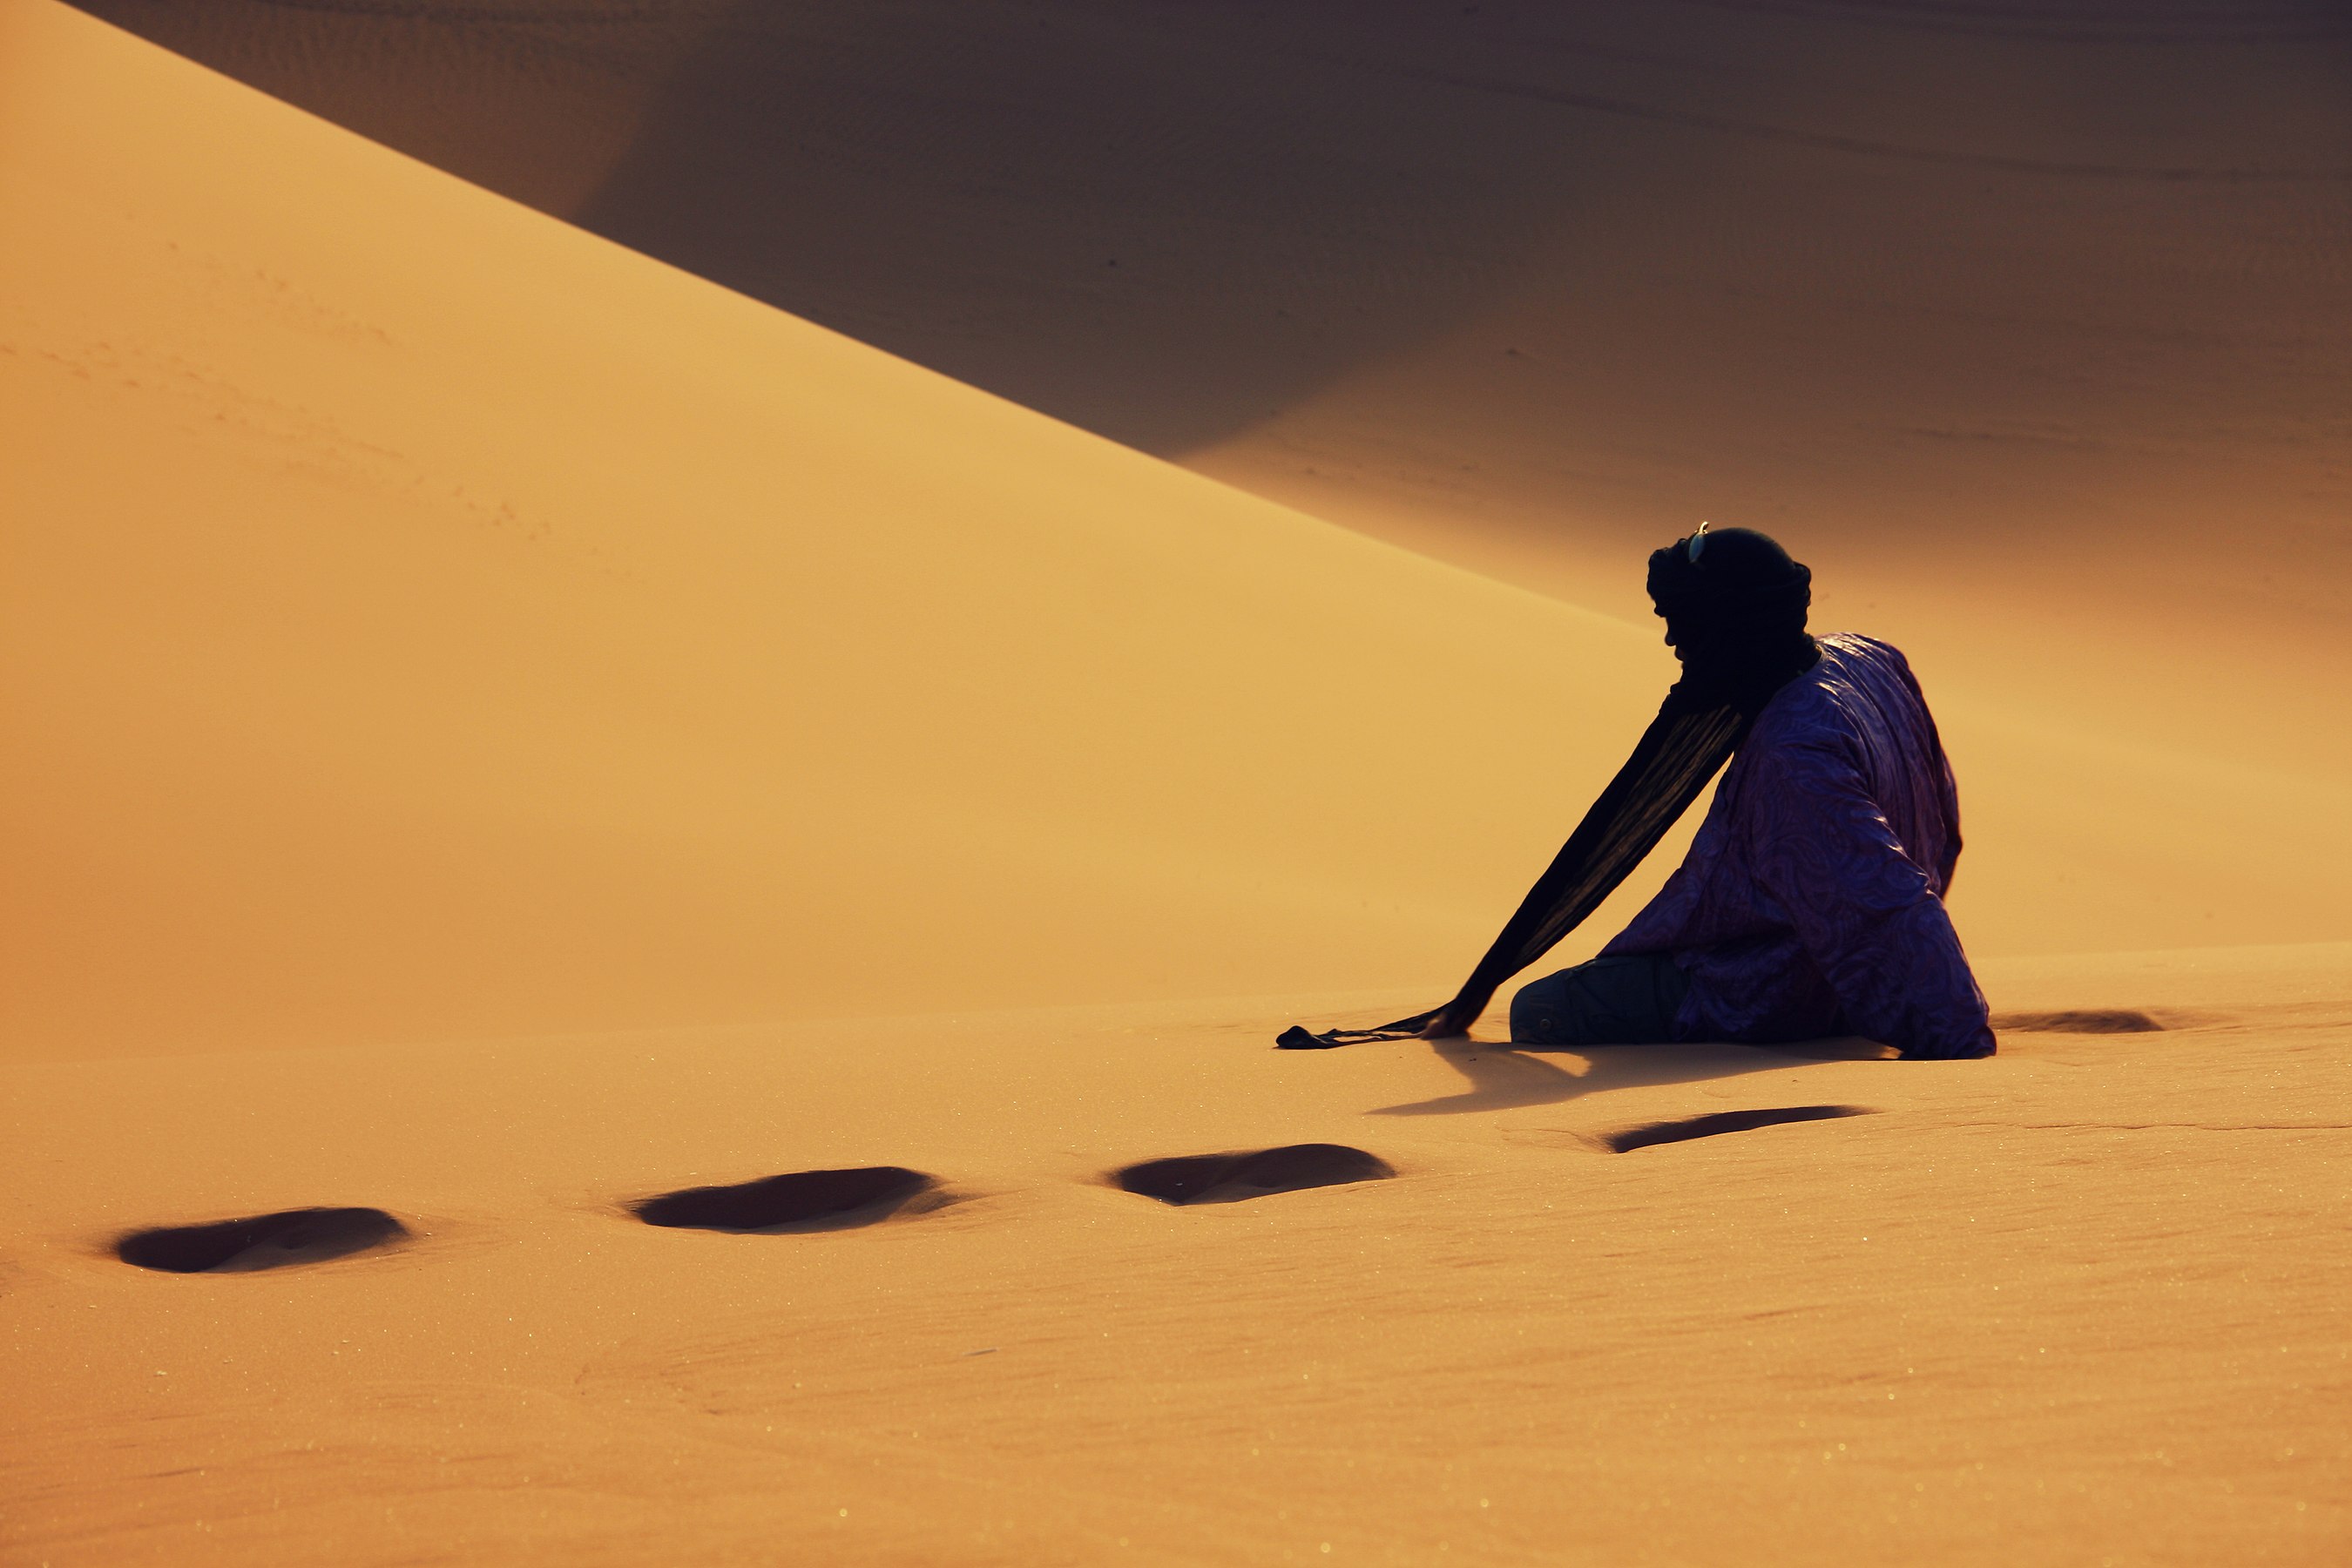 "Nomade in the desert of th Sahara" by Hamdanmourad